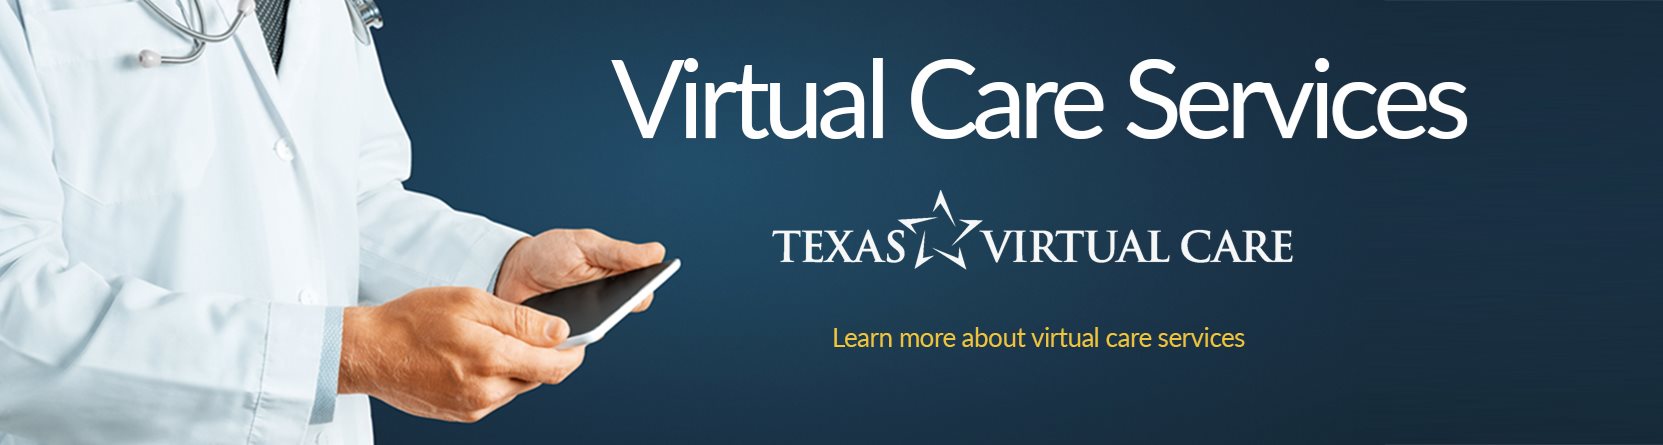 Banner Virtual Care